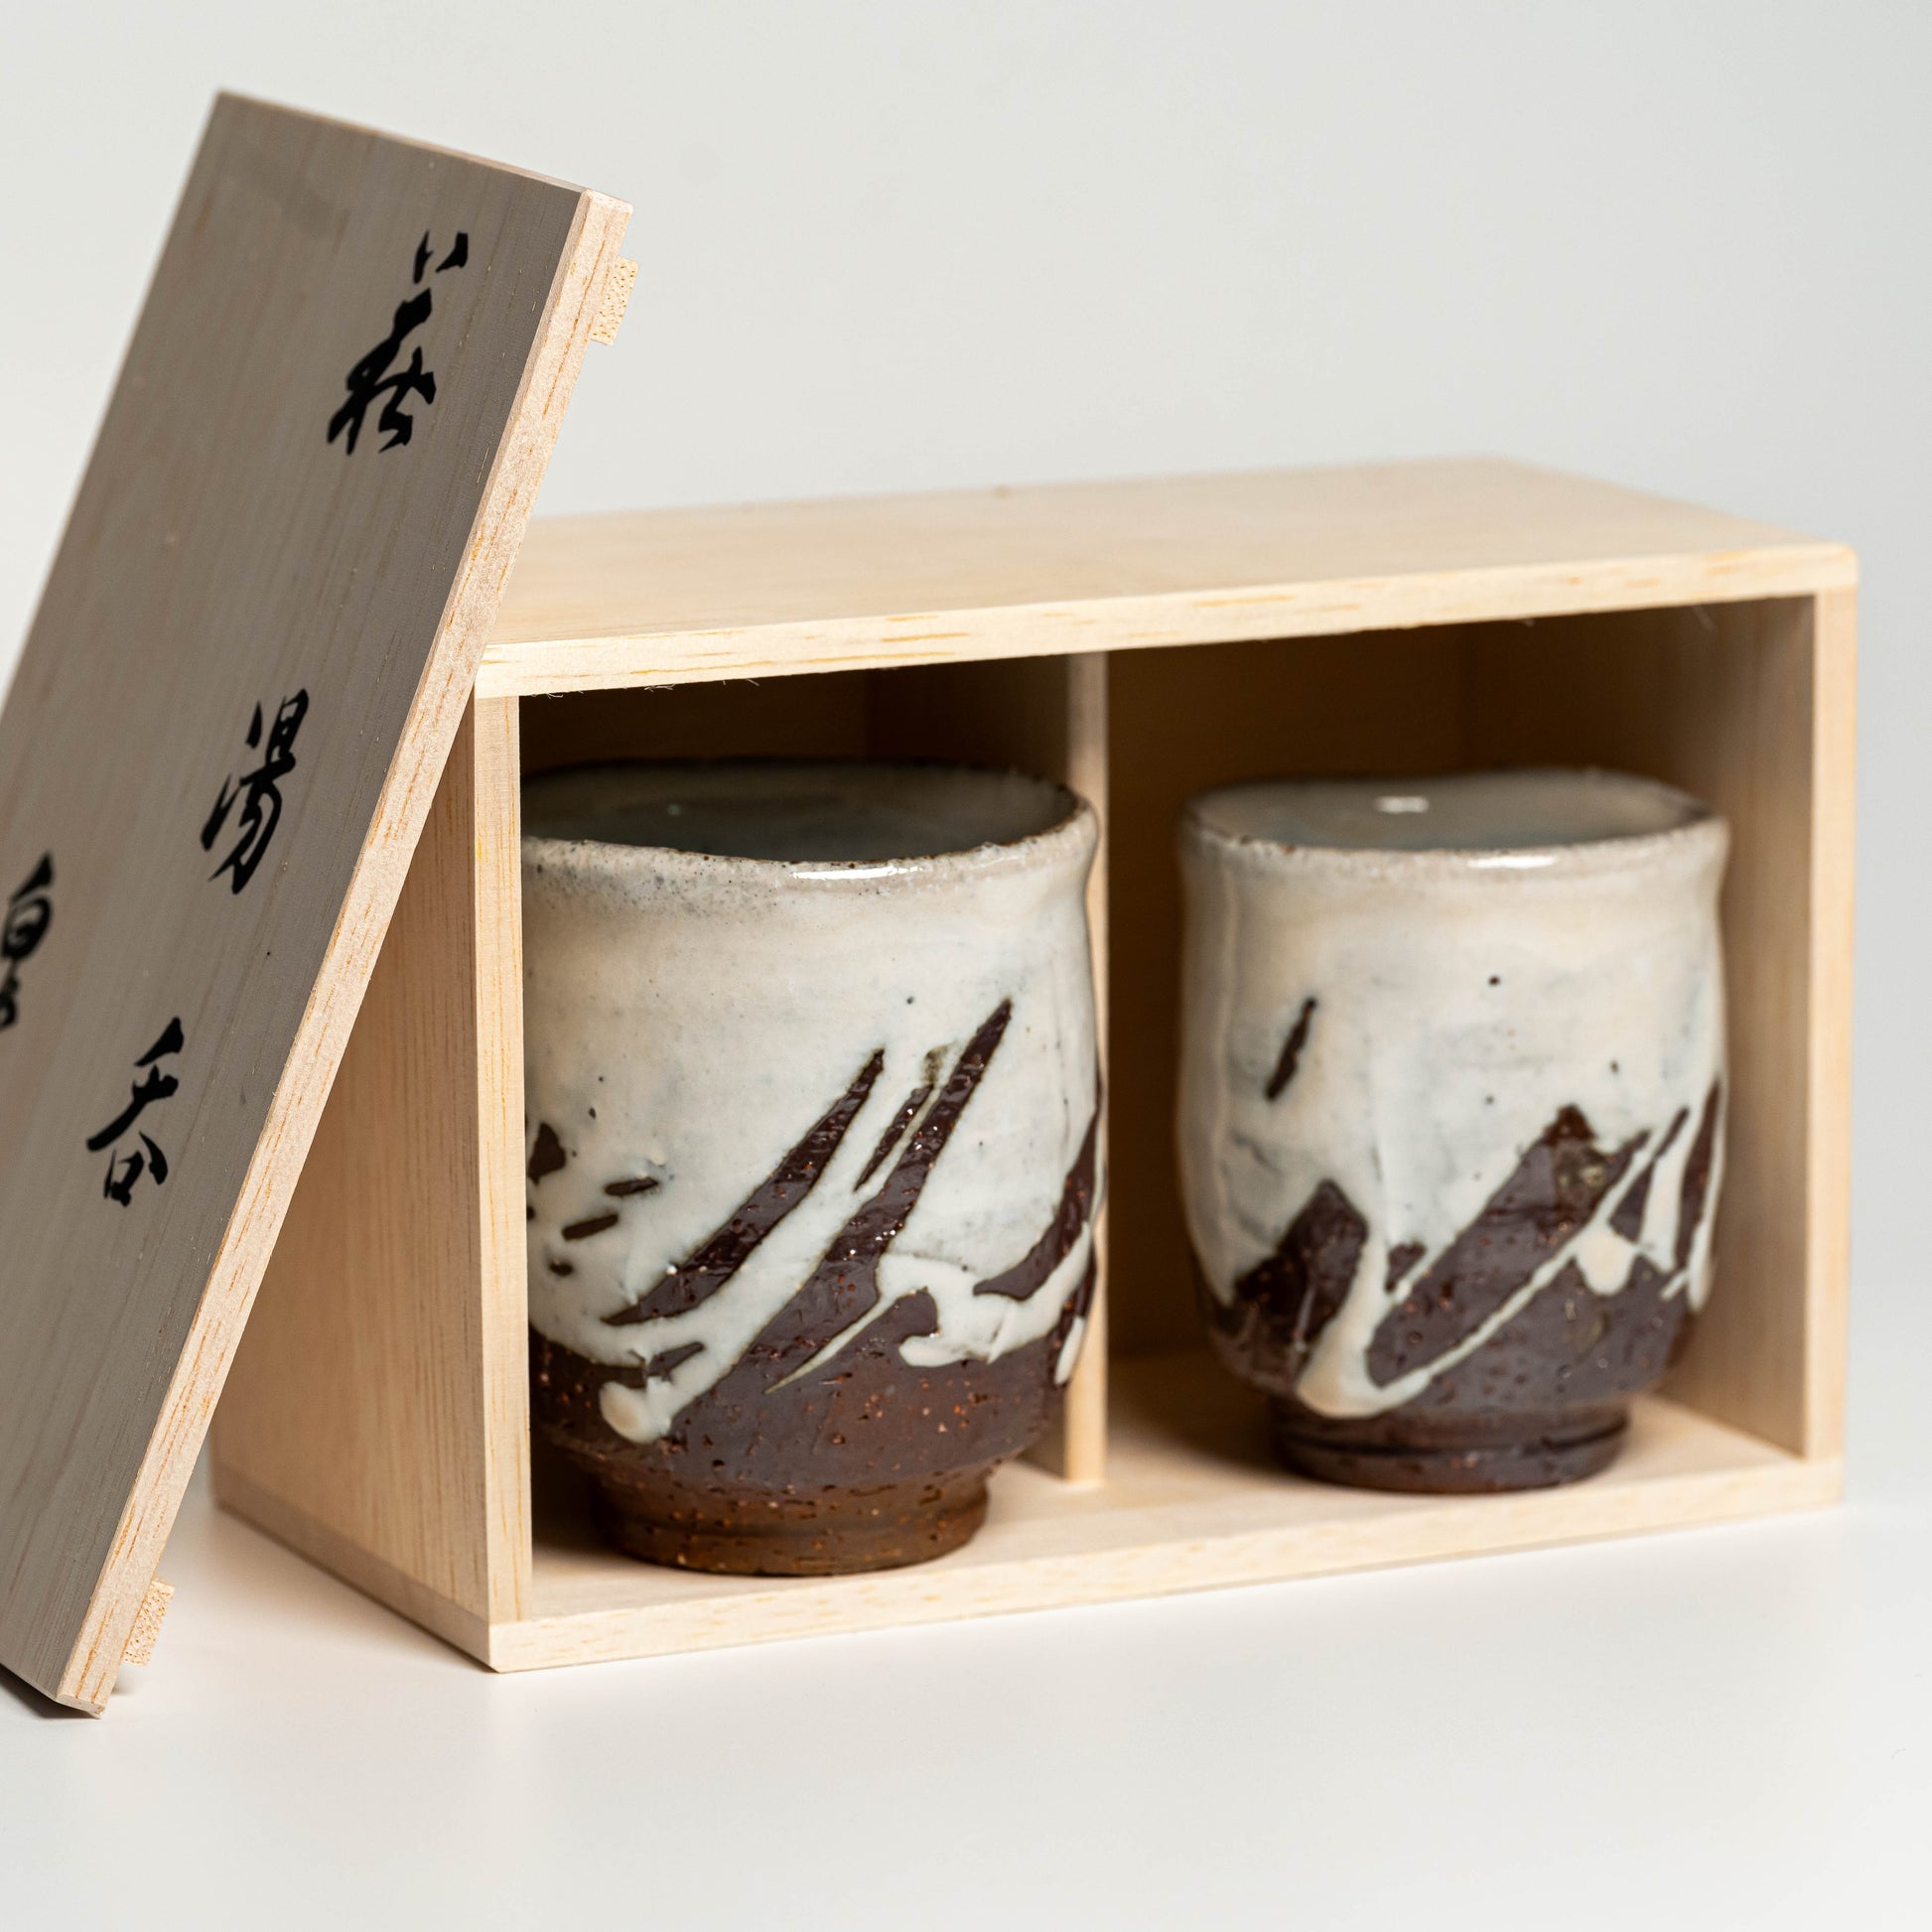 White Hagi yaki teacups in their wooden box on a white background